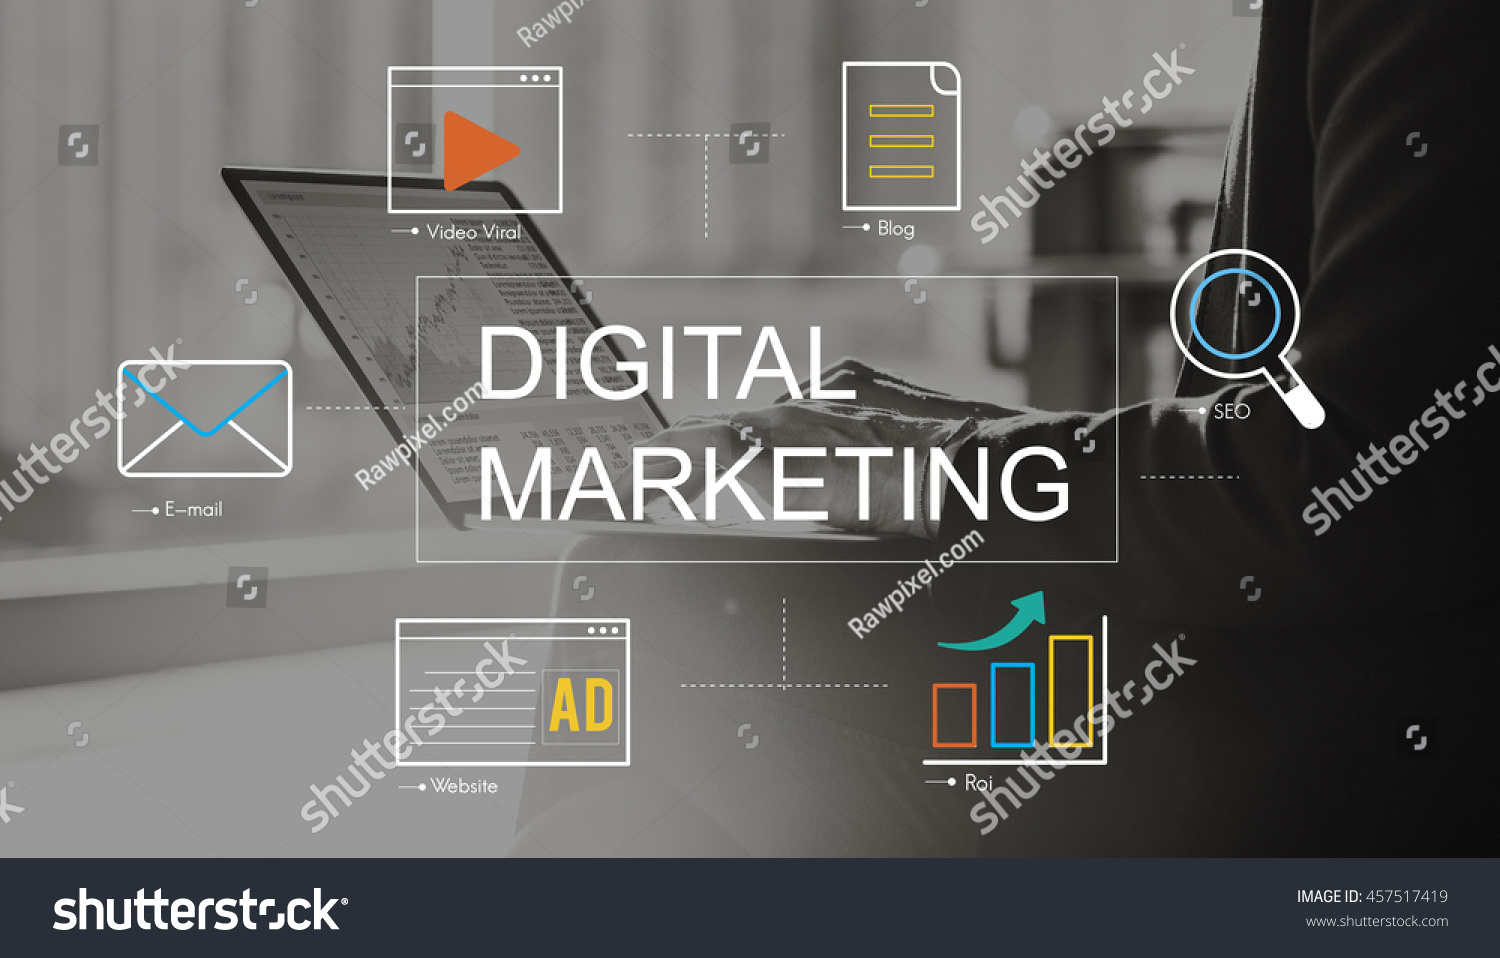 Digital Marketing Media Technology Graphic Concept #457517419